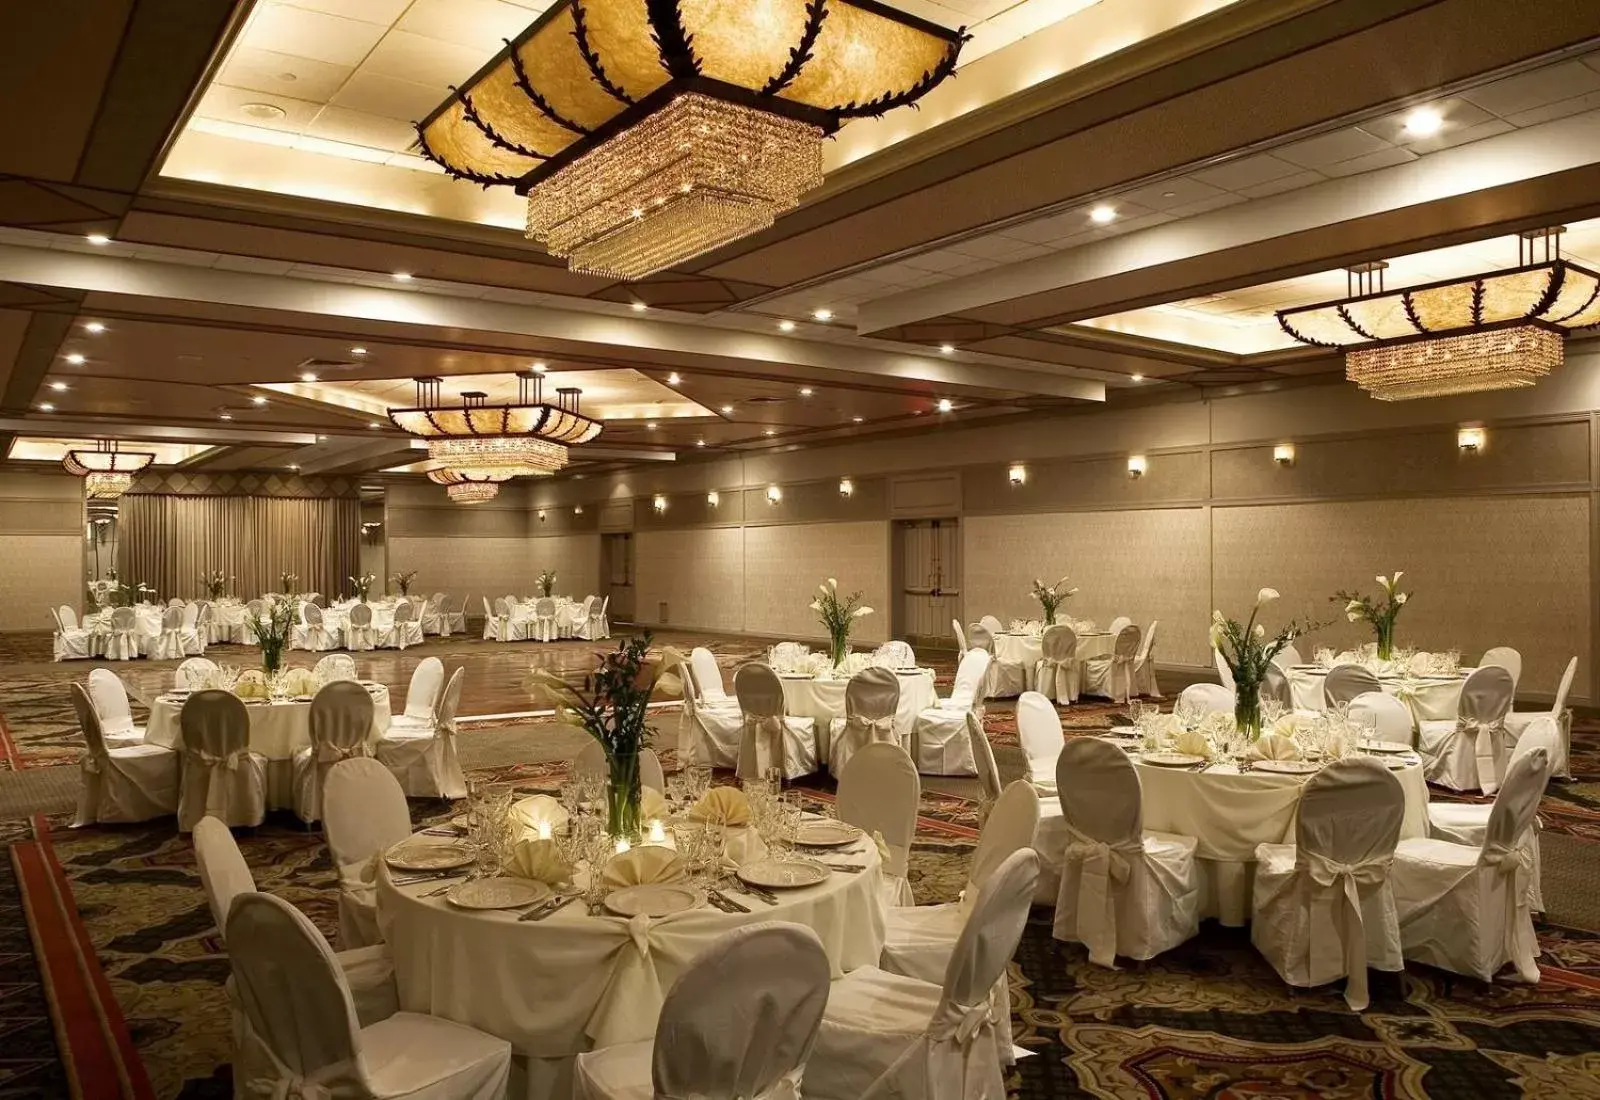 Banquet/Function facilities, Banquet Facilities in Radisson Hotel Hauppauge-Long Island